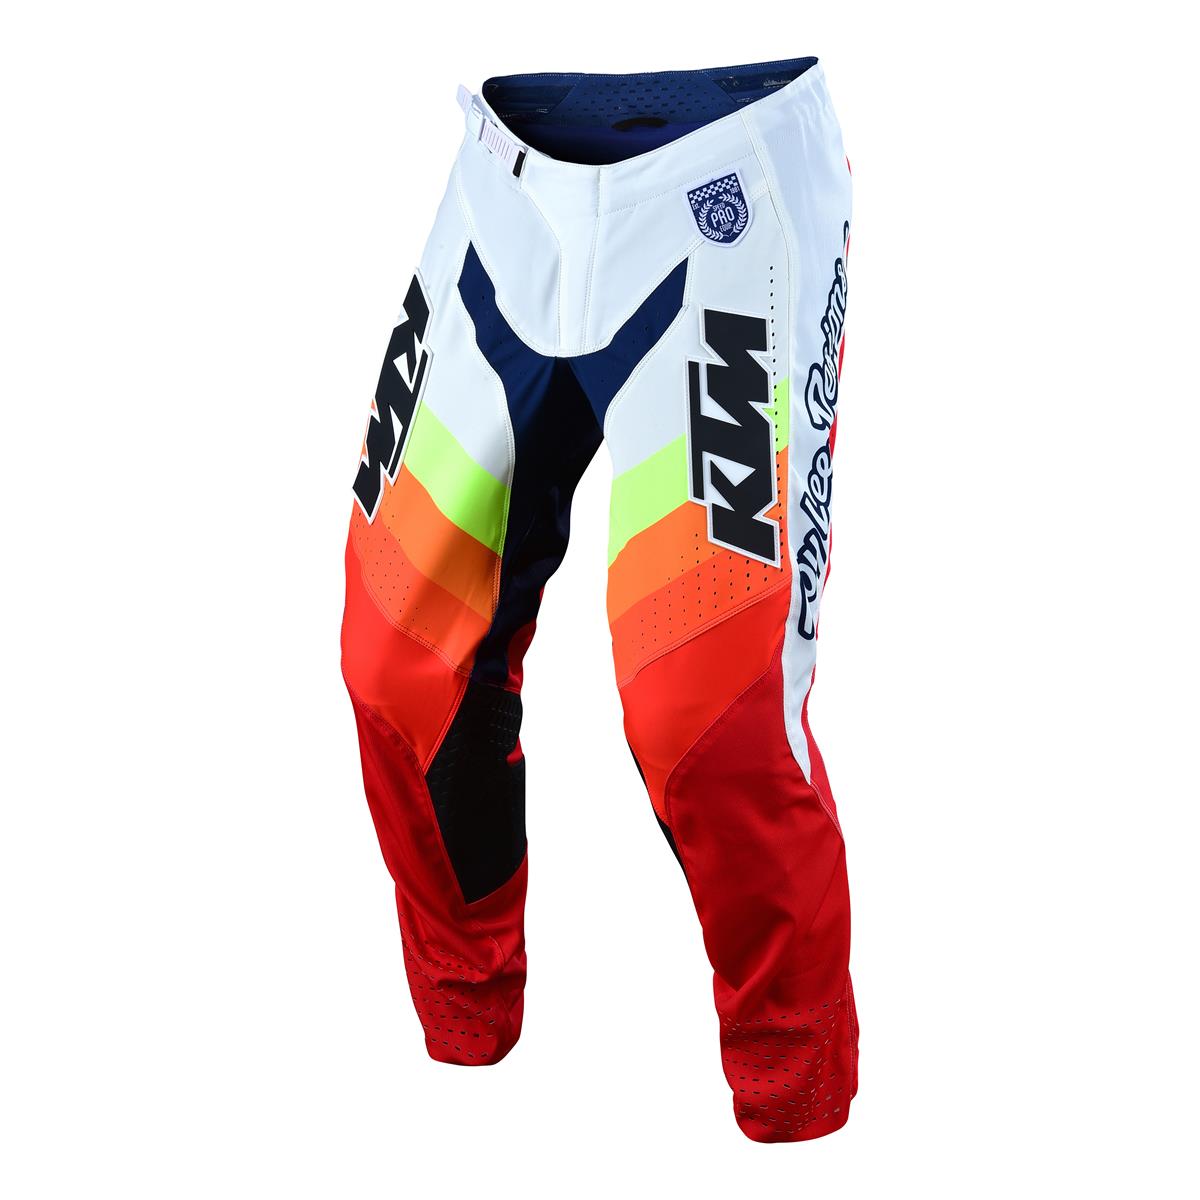 Troy Lee Designs TLD Pantaloni Motocross MX GP Brushed Team KTM con Tessuto Leggero e Confortevole Navy Orange